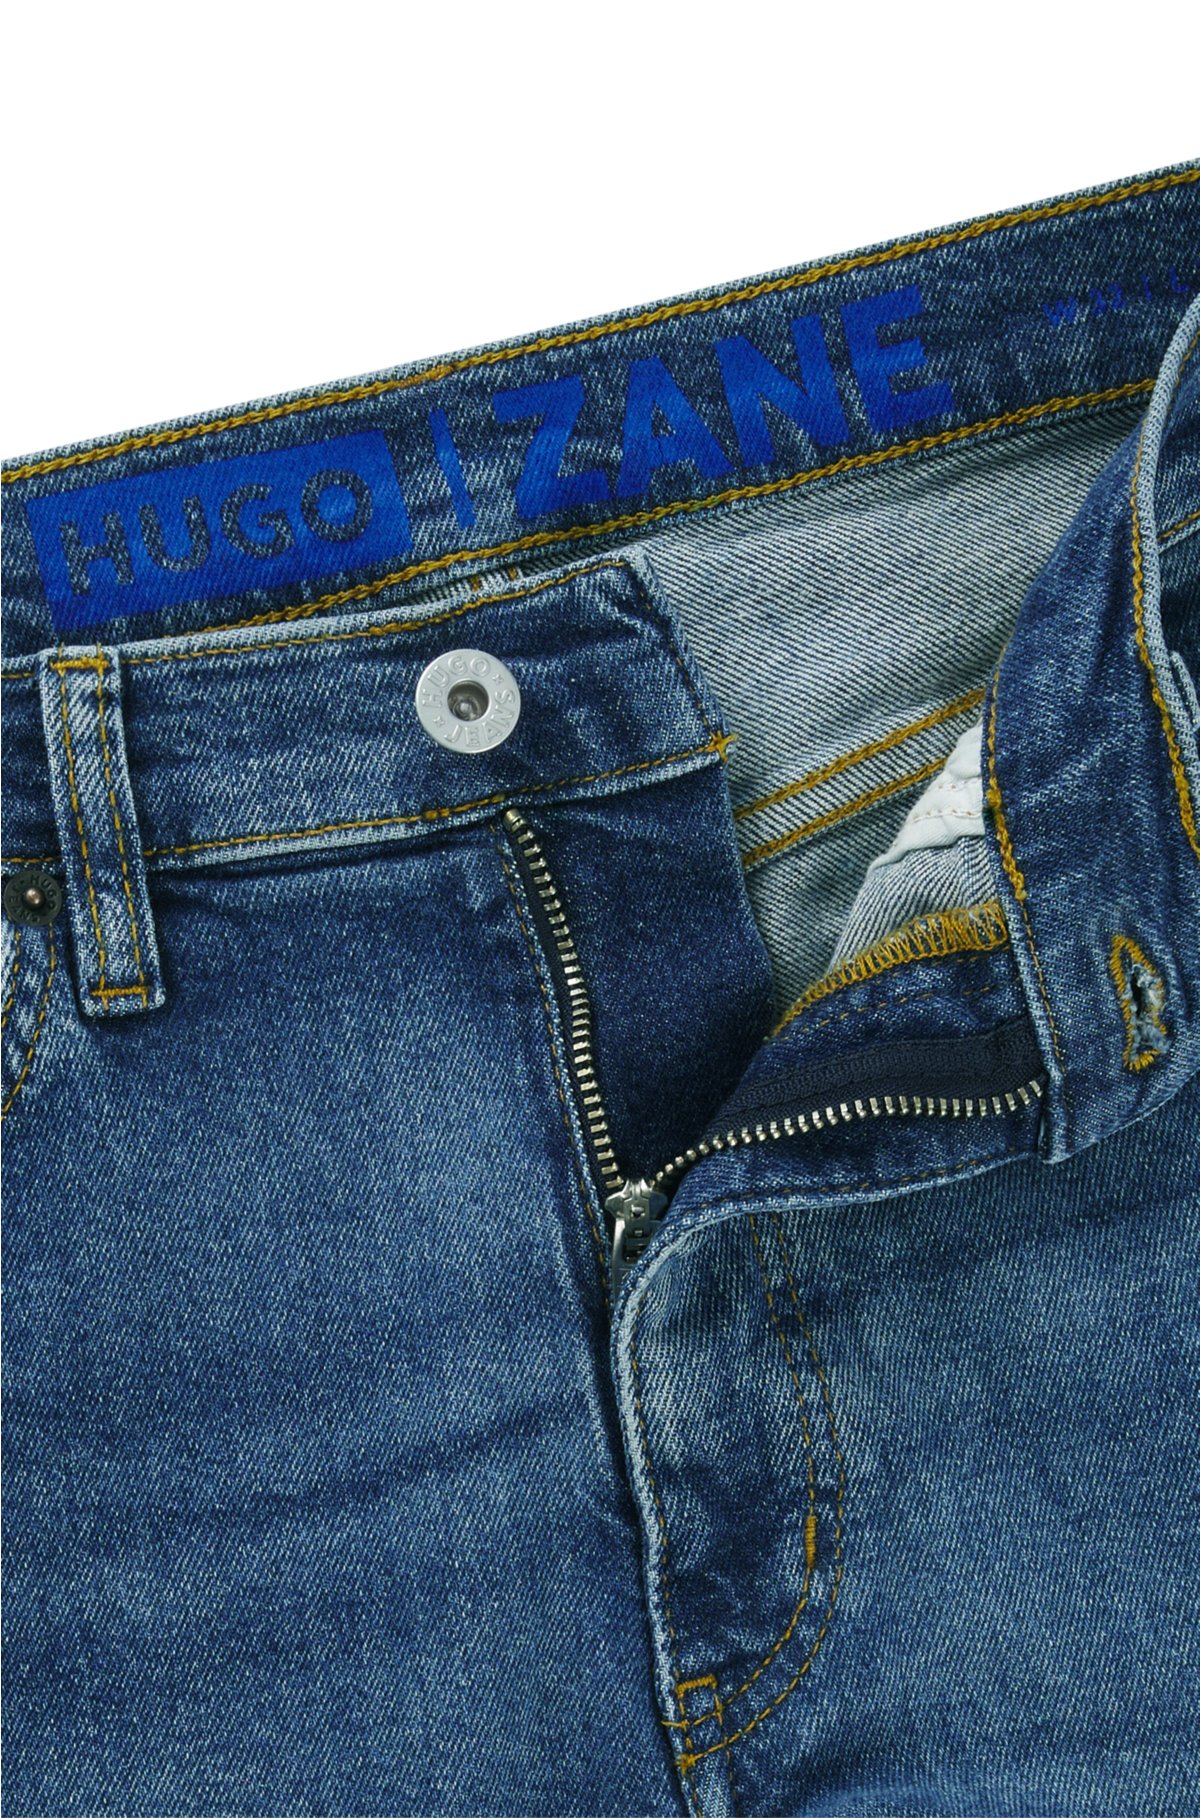 Extra-slim-fit jeans in navy stonewashed stretch denim, Blue